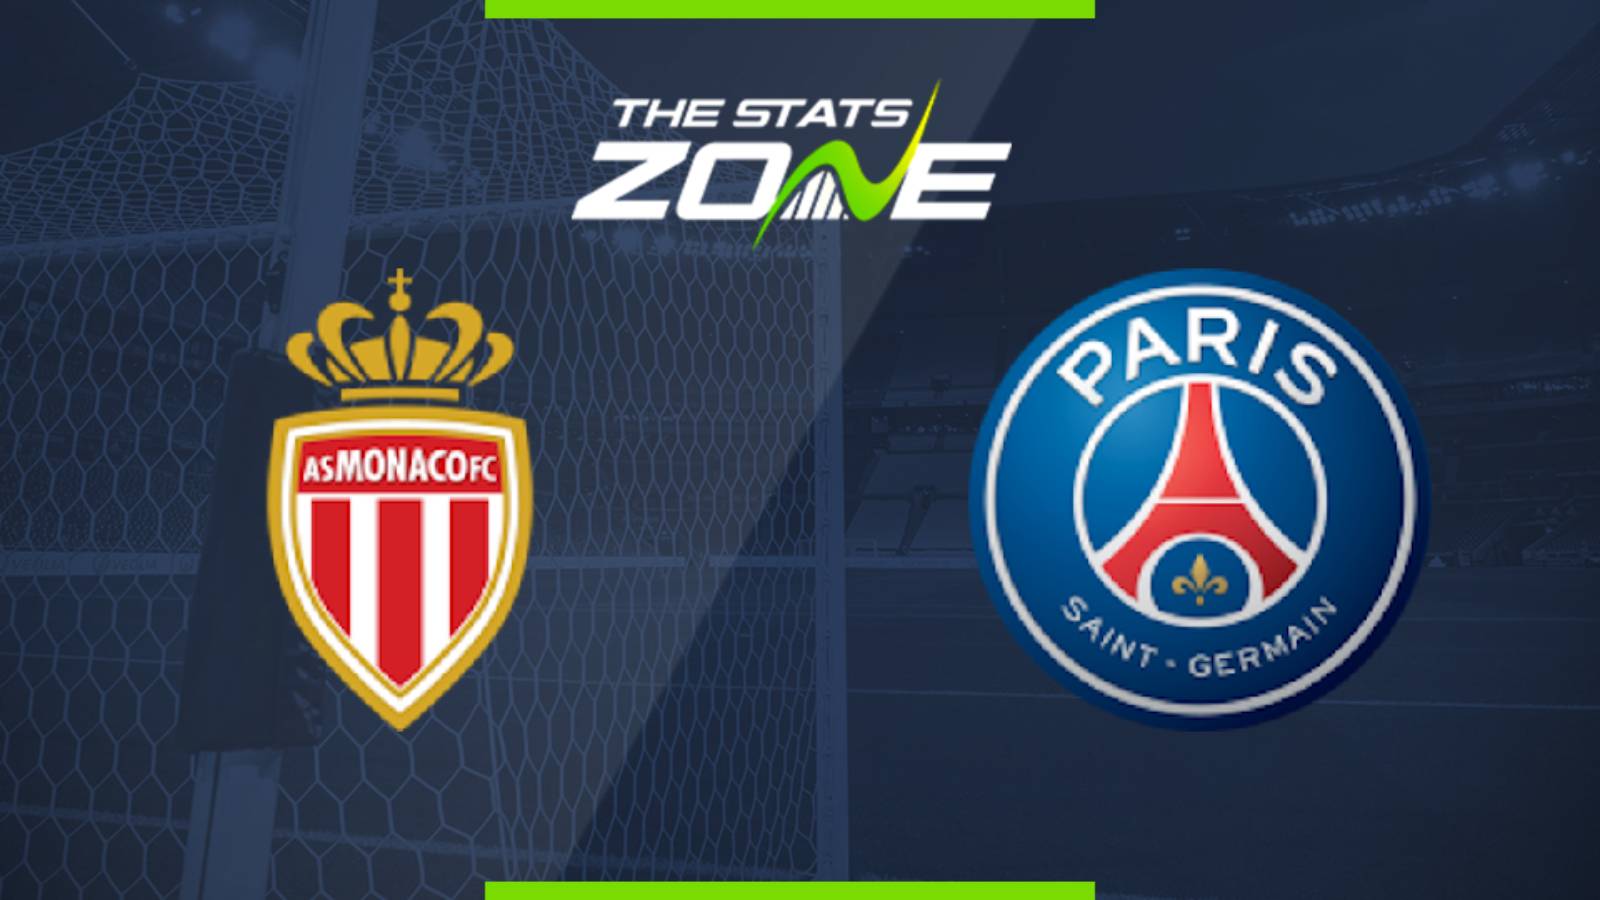 2019 20 Ligue 1 Monaco Vs Psg Preview Prediction The Stats Zone